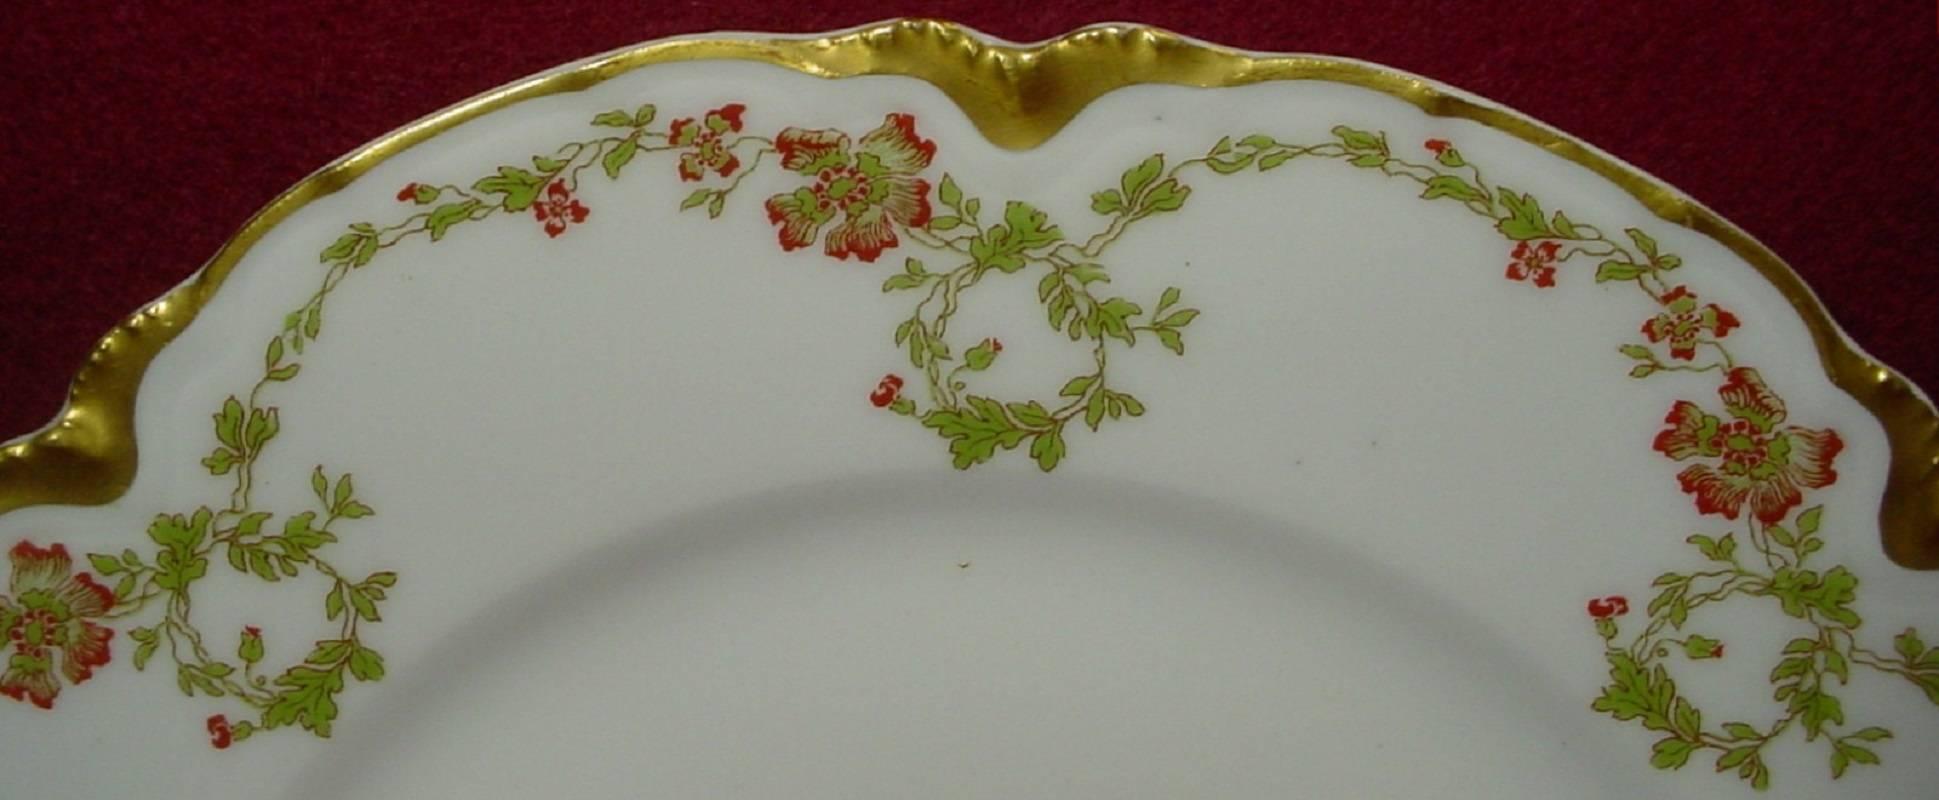 Haviland China Schleiger 705 pattern dinner plate 9-5/8